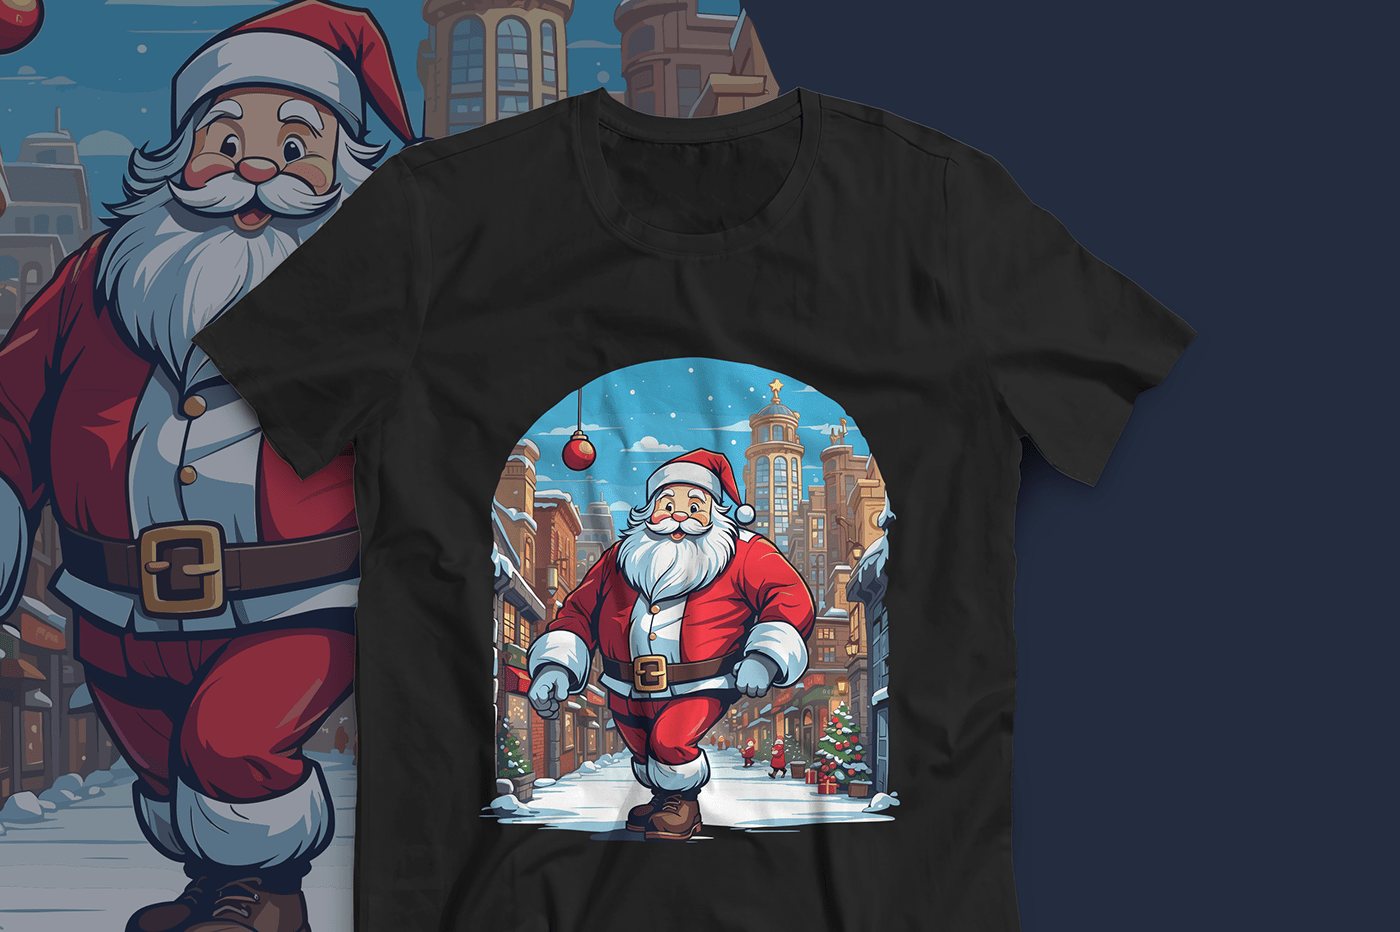 Santa Claus Christmas city comic art T-Shirt Design ILLUSTRATION  EPS vector